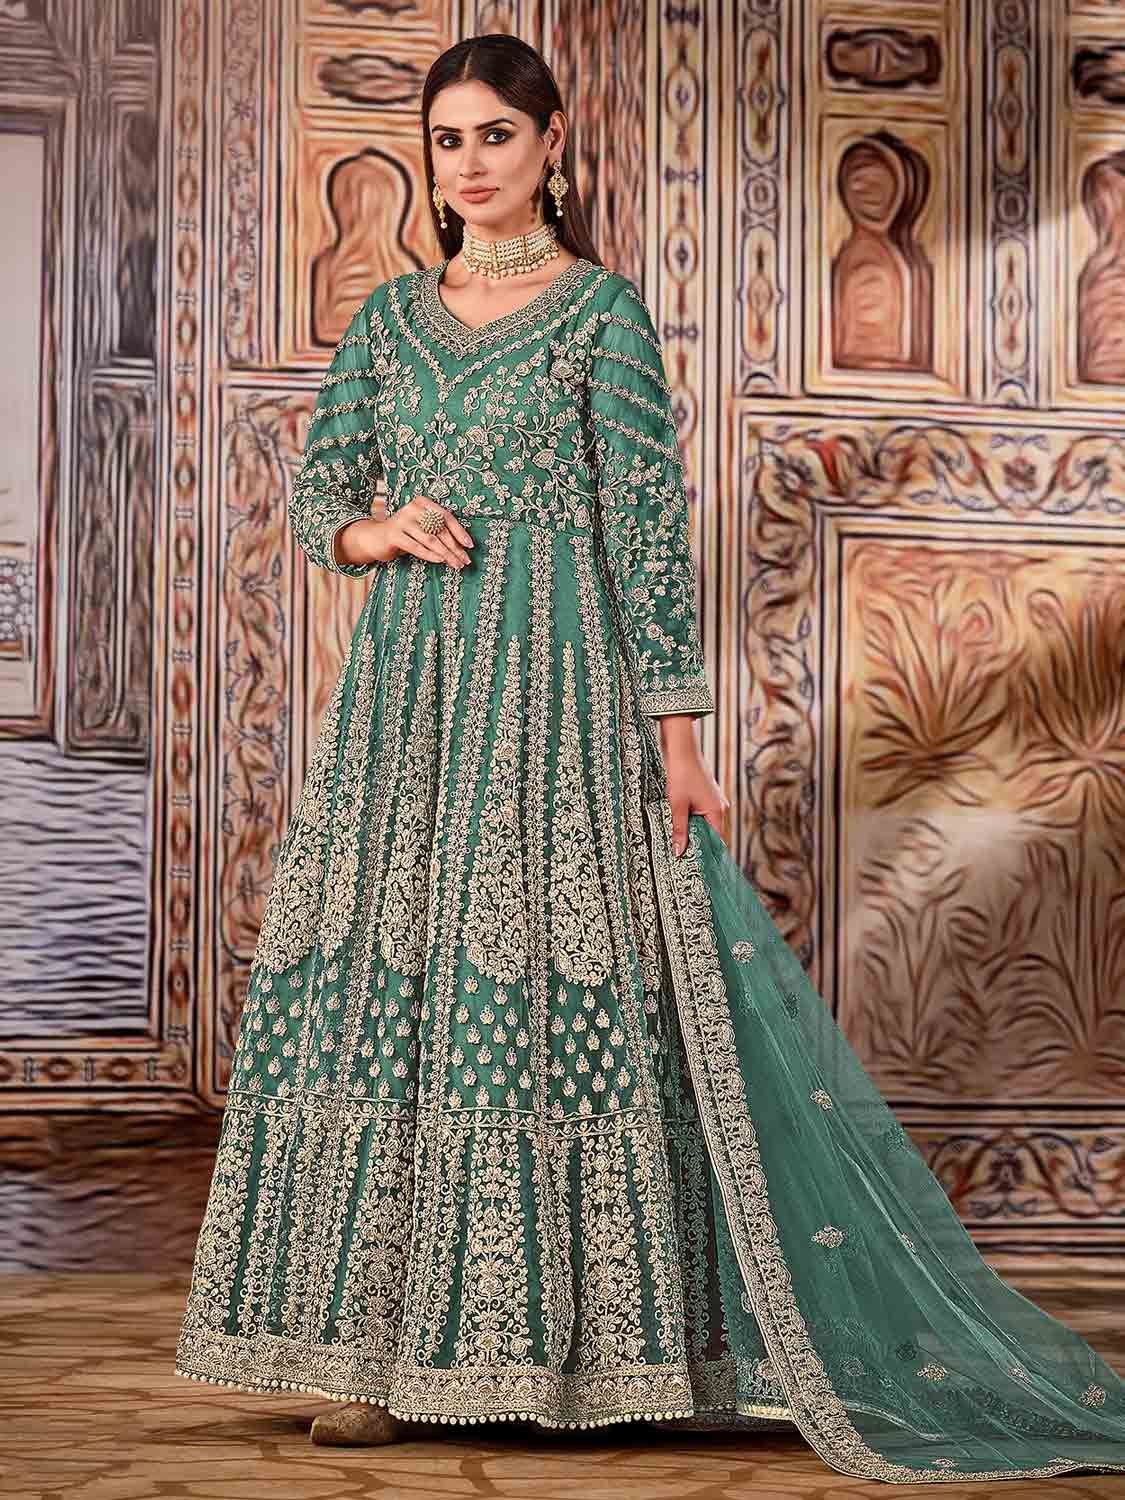 Anarkali Salwar Suits Archives | Readiprint Fashions Blog